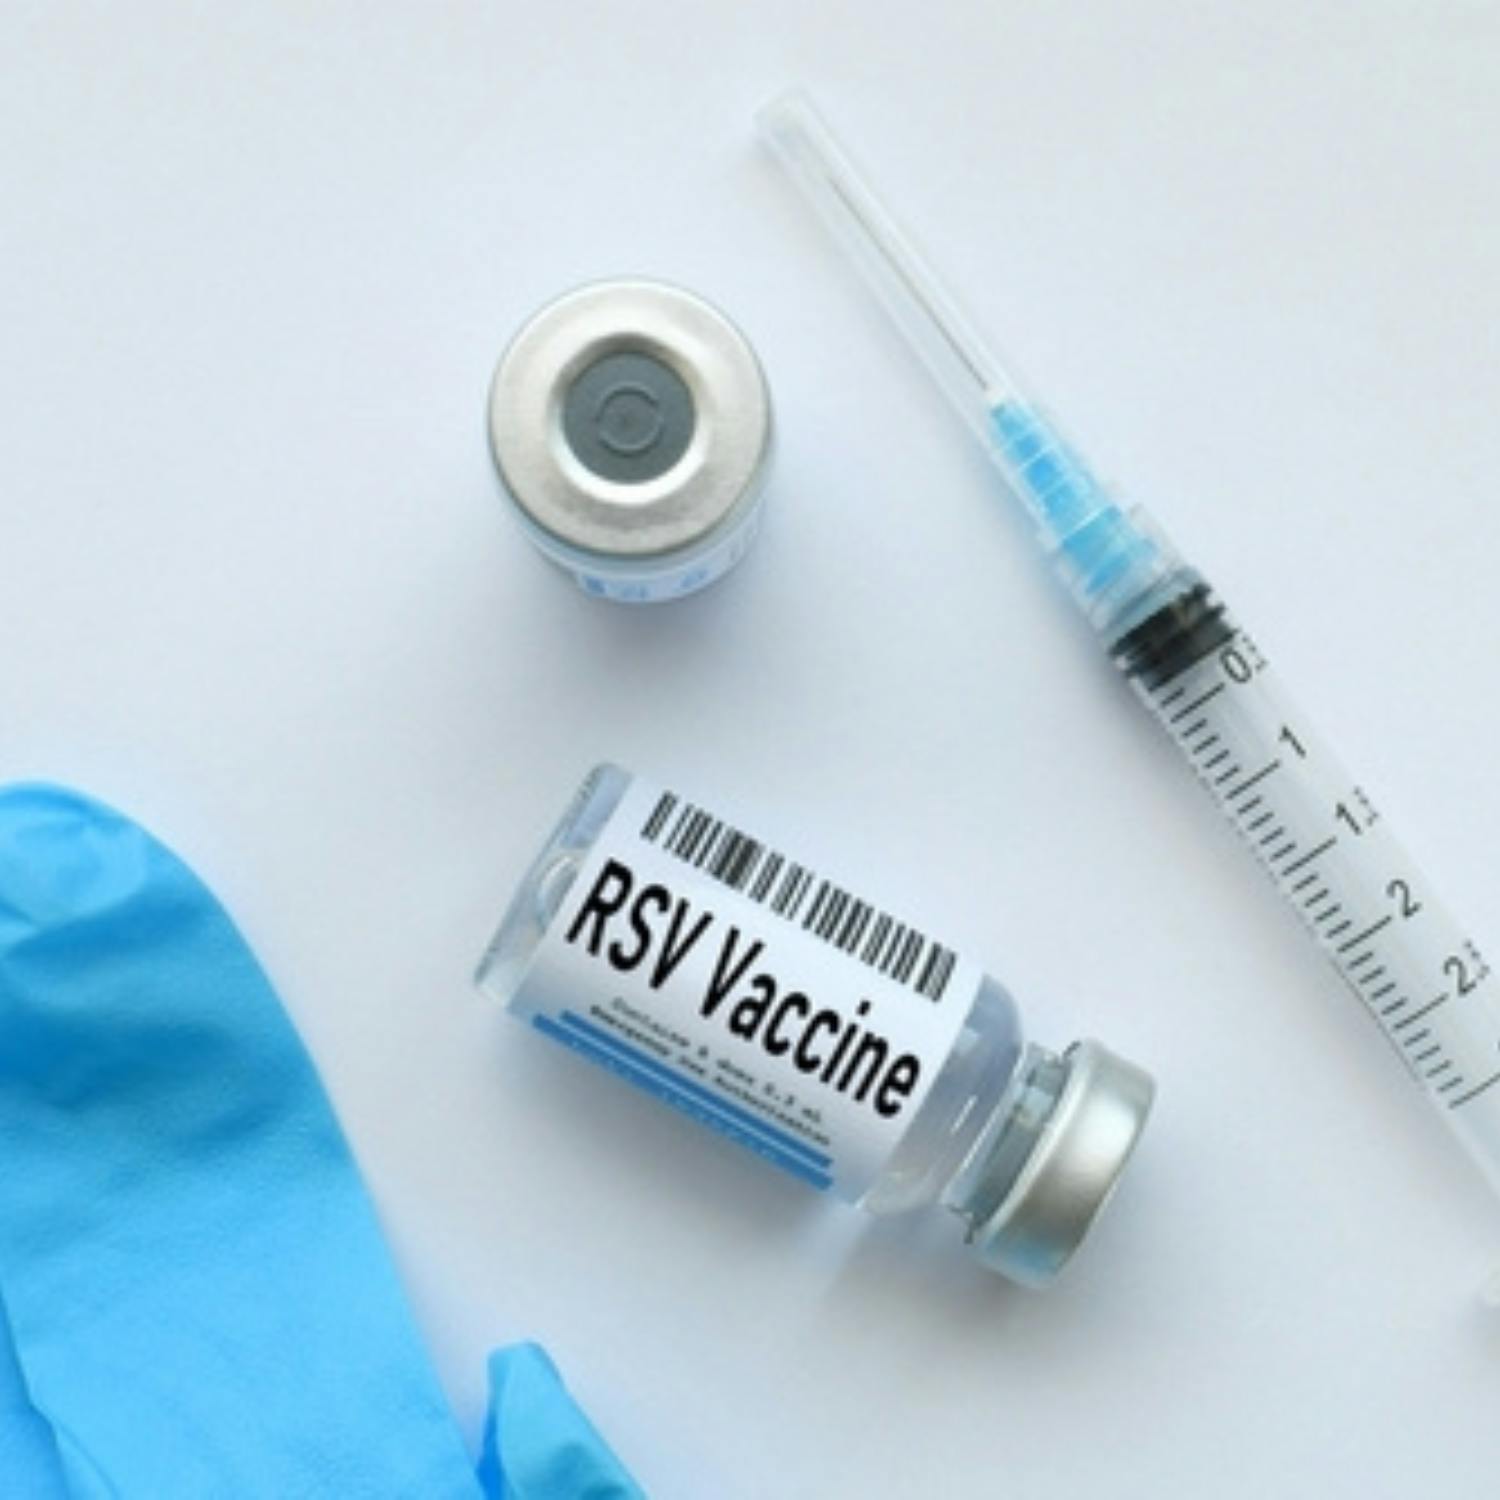 Half of all Babies will not get vital RSV immunization warn pharmacists